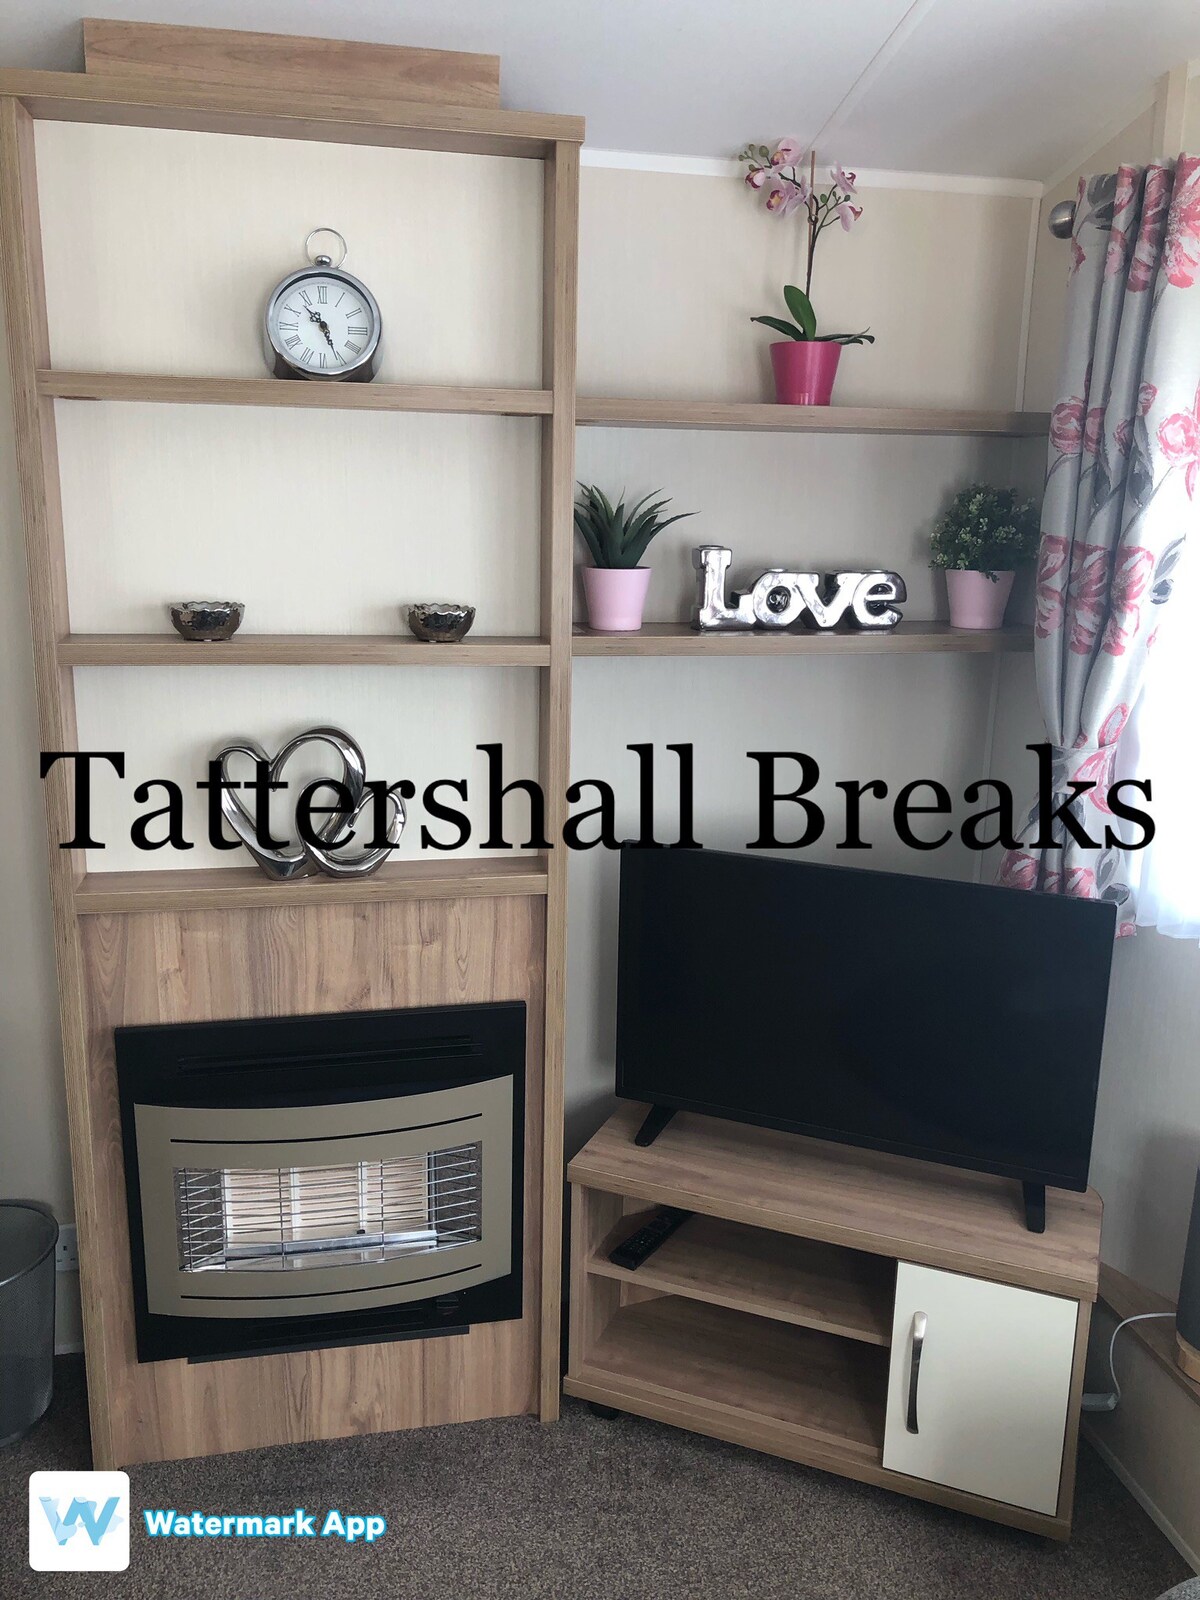 Tattershall Breaks